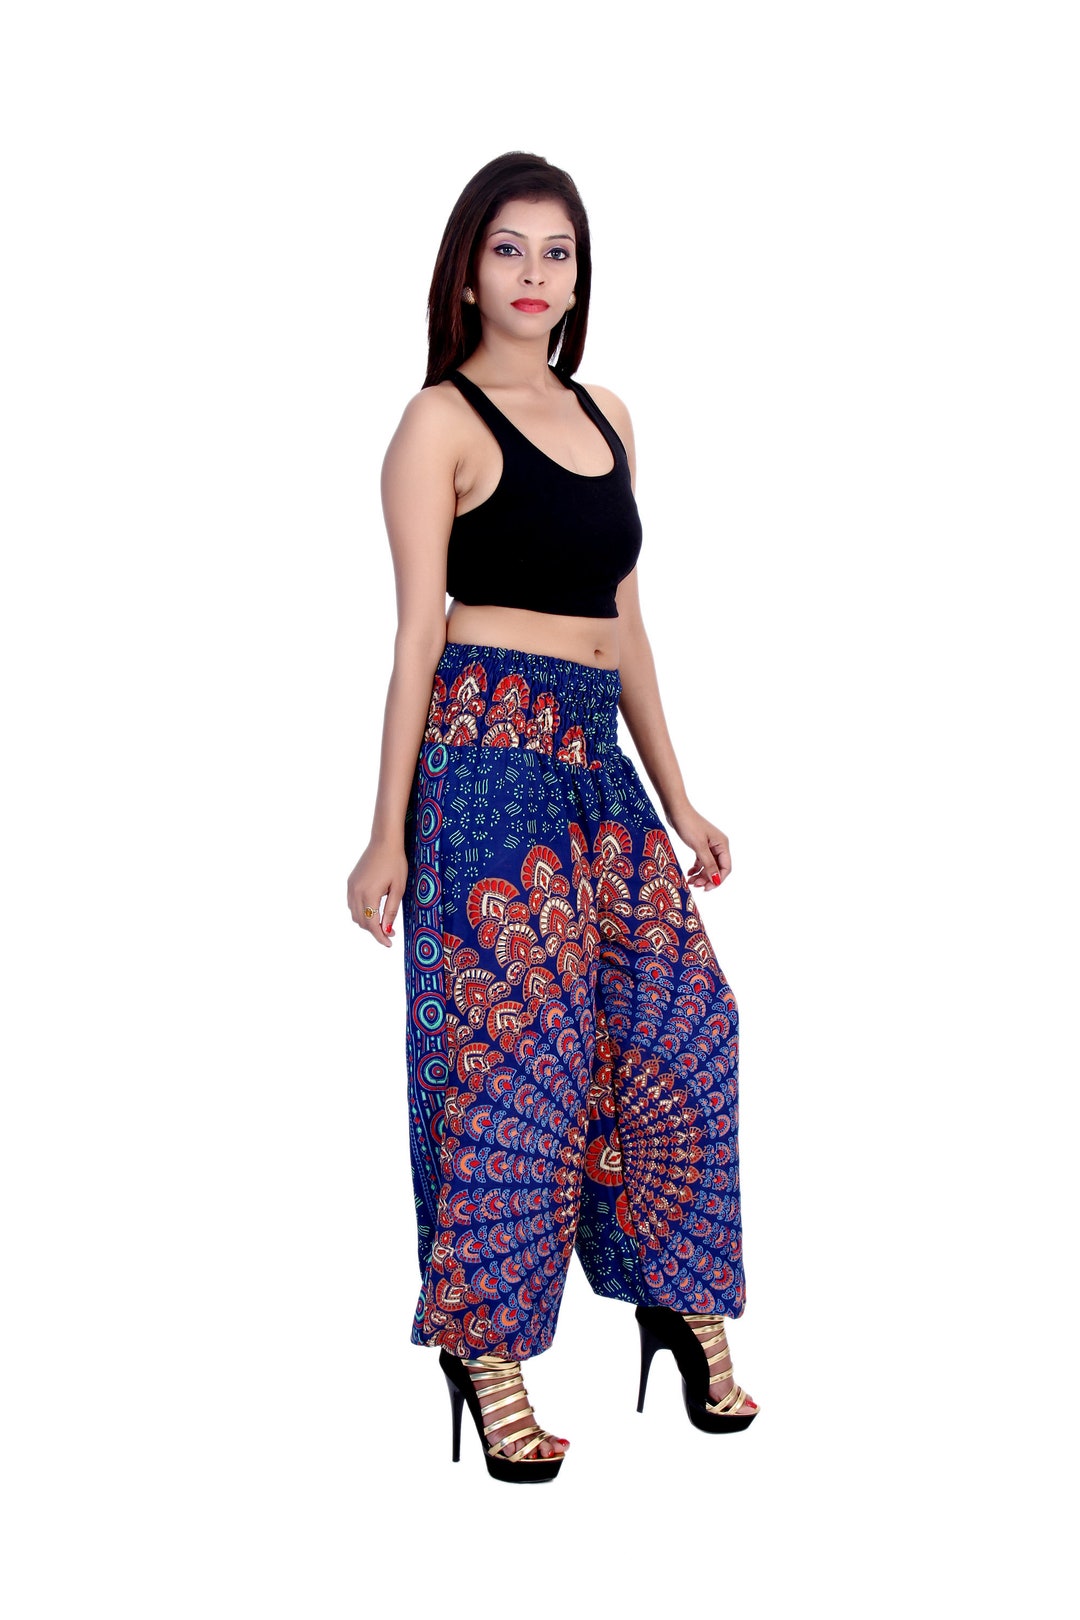 Mandala Harem Pants Women High Crotch Hippie Pants Comfy - Etsy